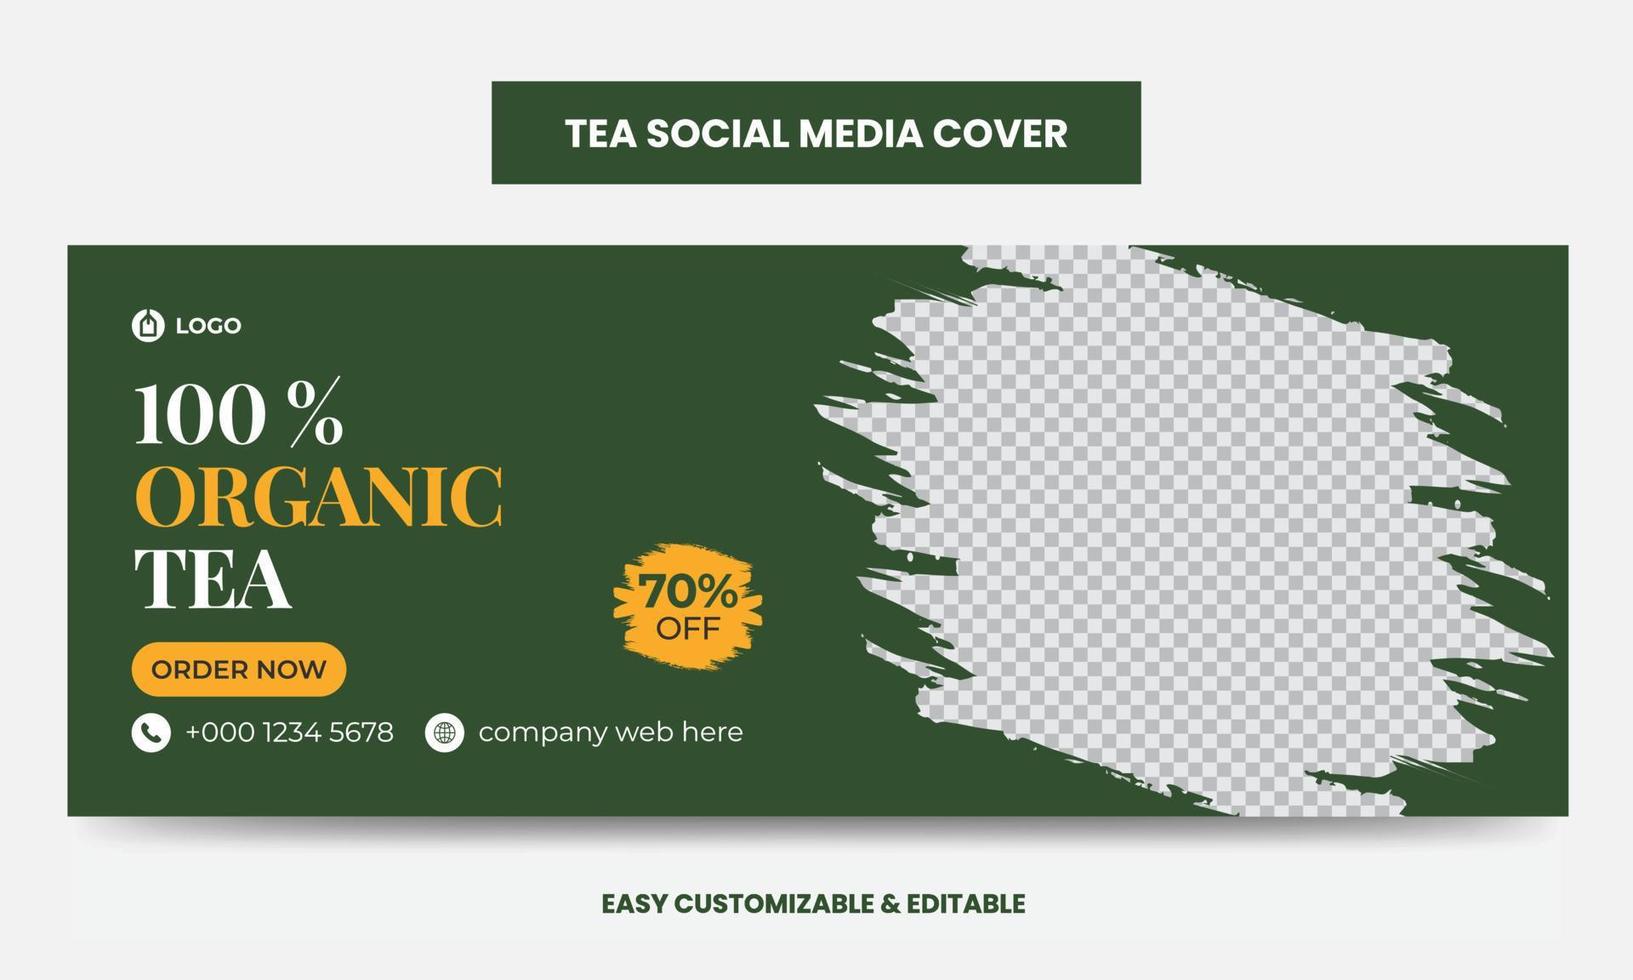 Organic tea company social media cover photo design template. Tea timeline web banner template vector